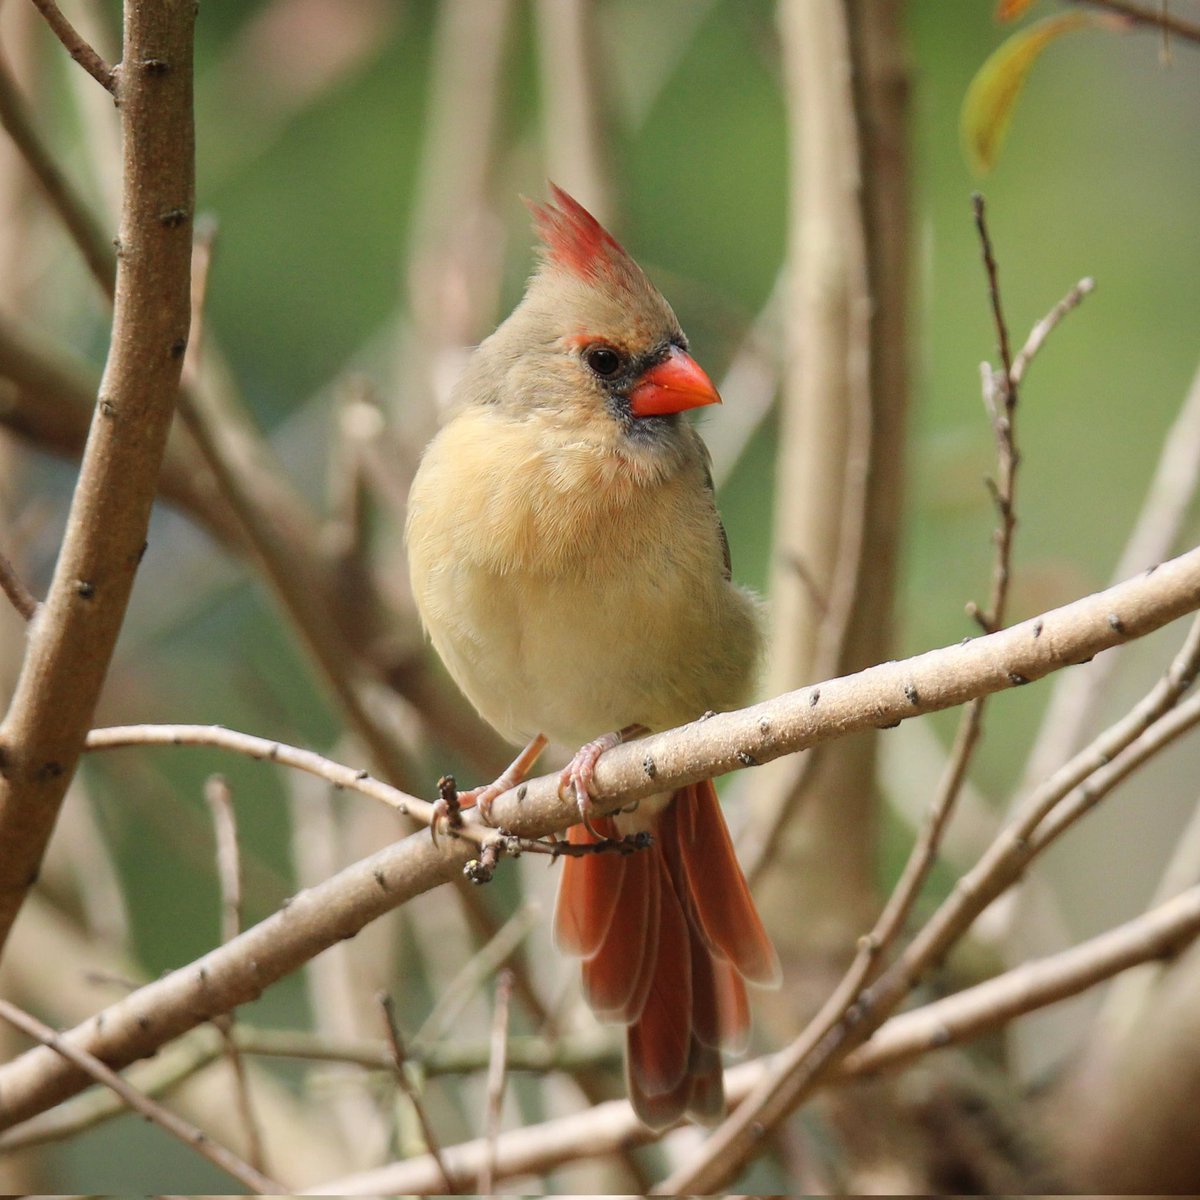 I adore this female cardinal's perfectly fanned tail... she is a beauty!
#femalecardinal #cardinals #femalecardinals #cardinal #ohiobirding #ohiobirder #birder #birdphoto #birdlife #birdworld #birdwatchers_daily #birdplanet